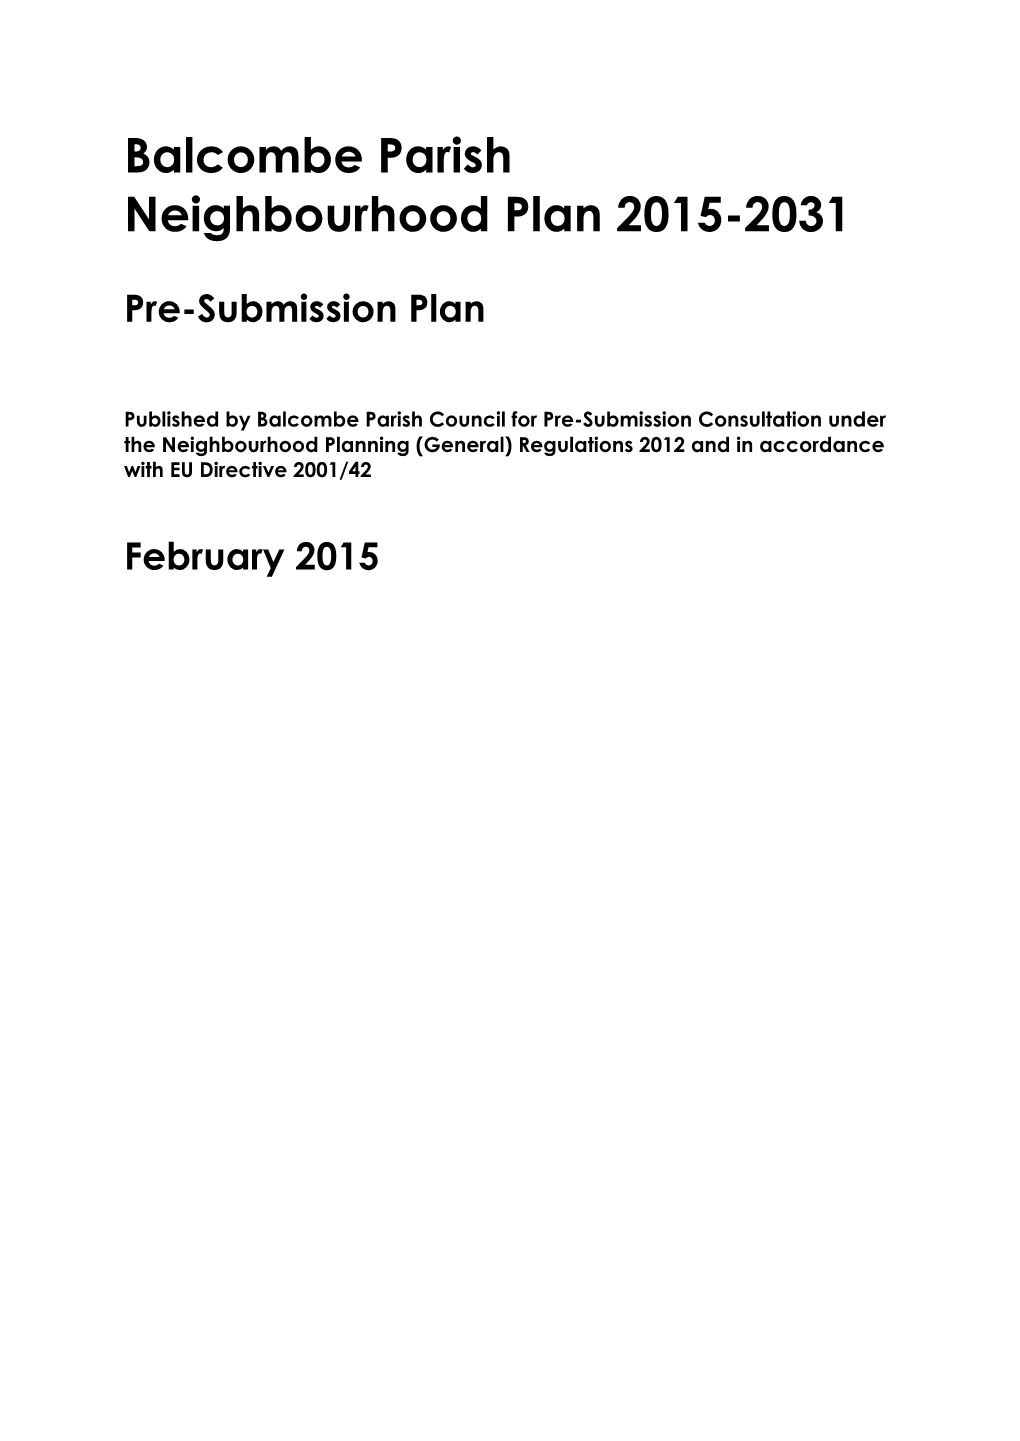 Balcombe Parish Neighbourhood Development Plan:Draft Pre